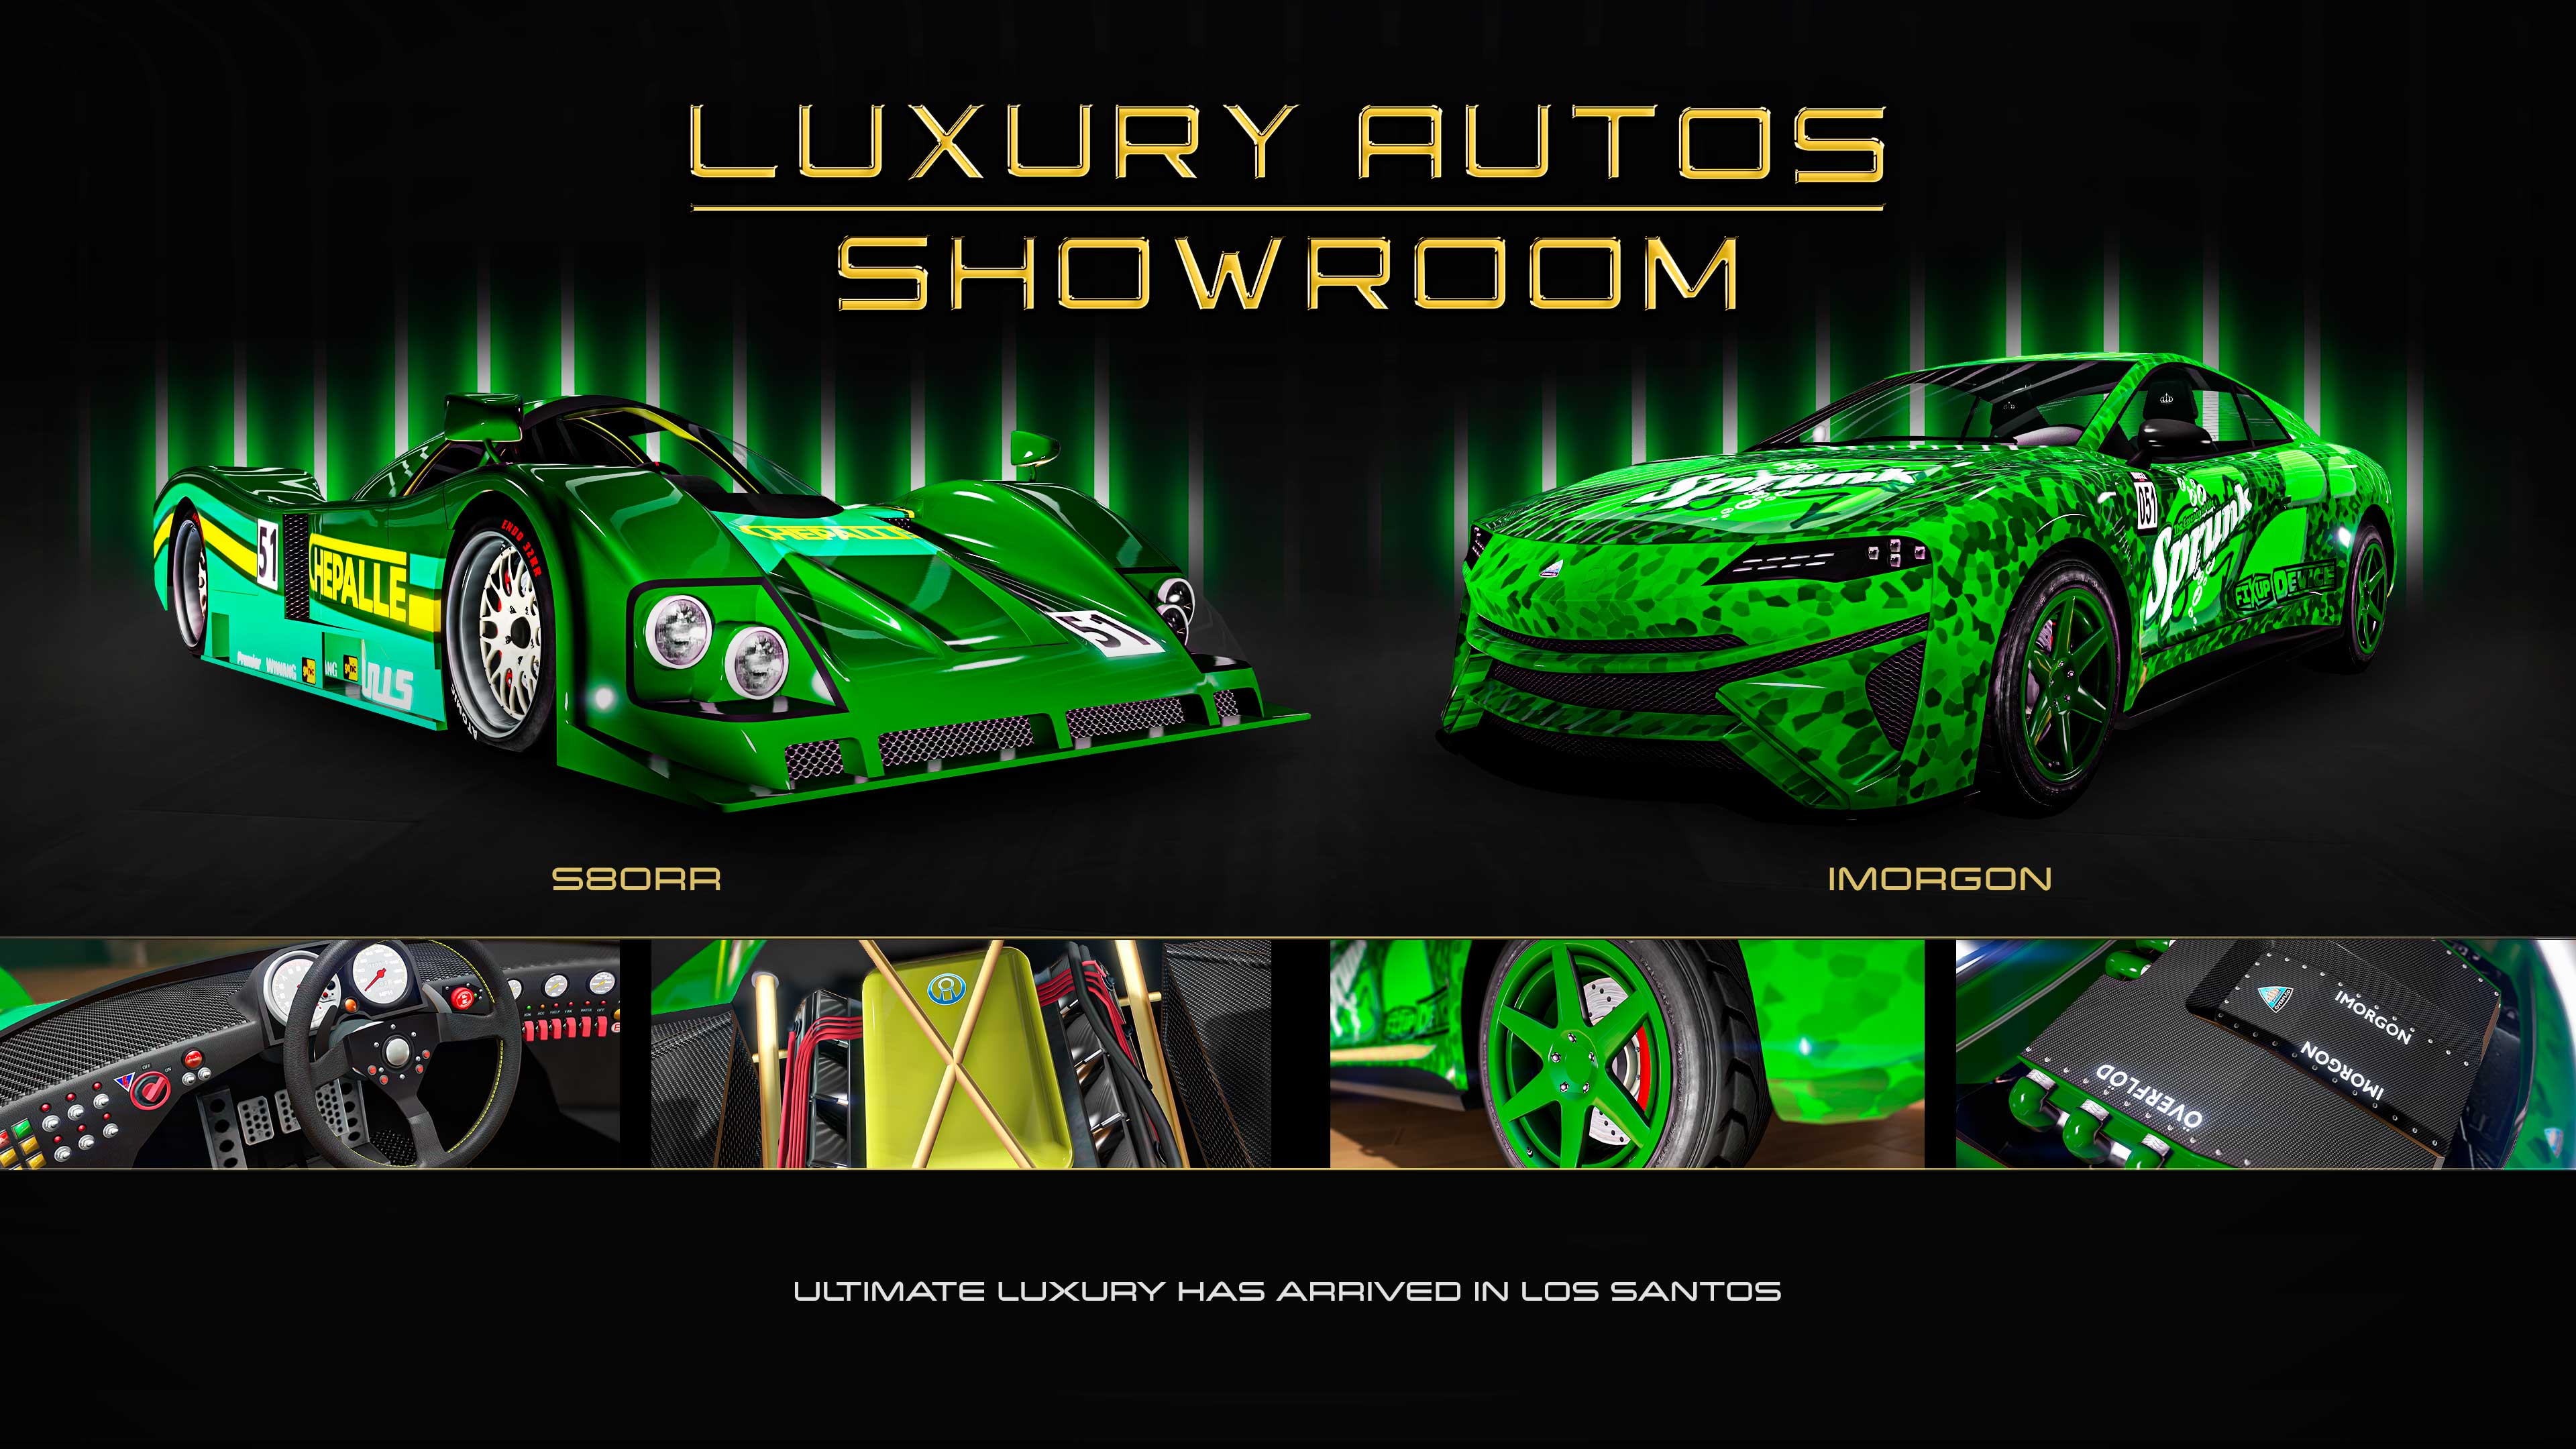 poster raffigurante i veicoli dell’autosalone Luxury Autos